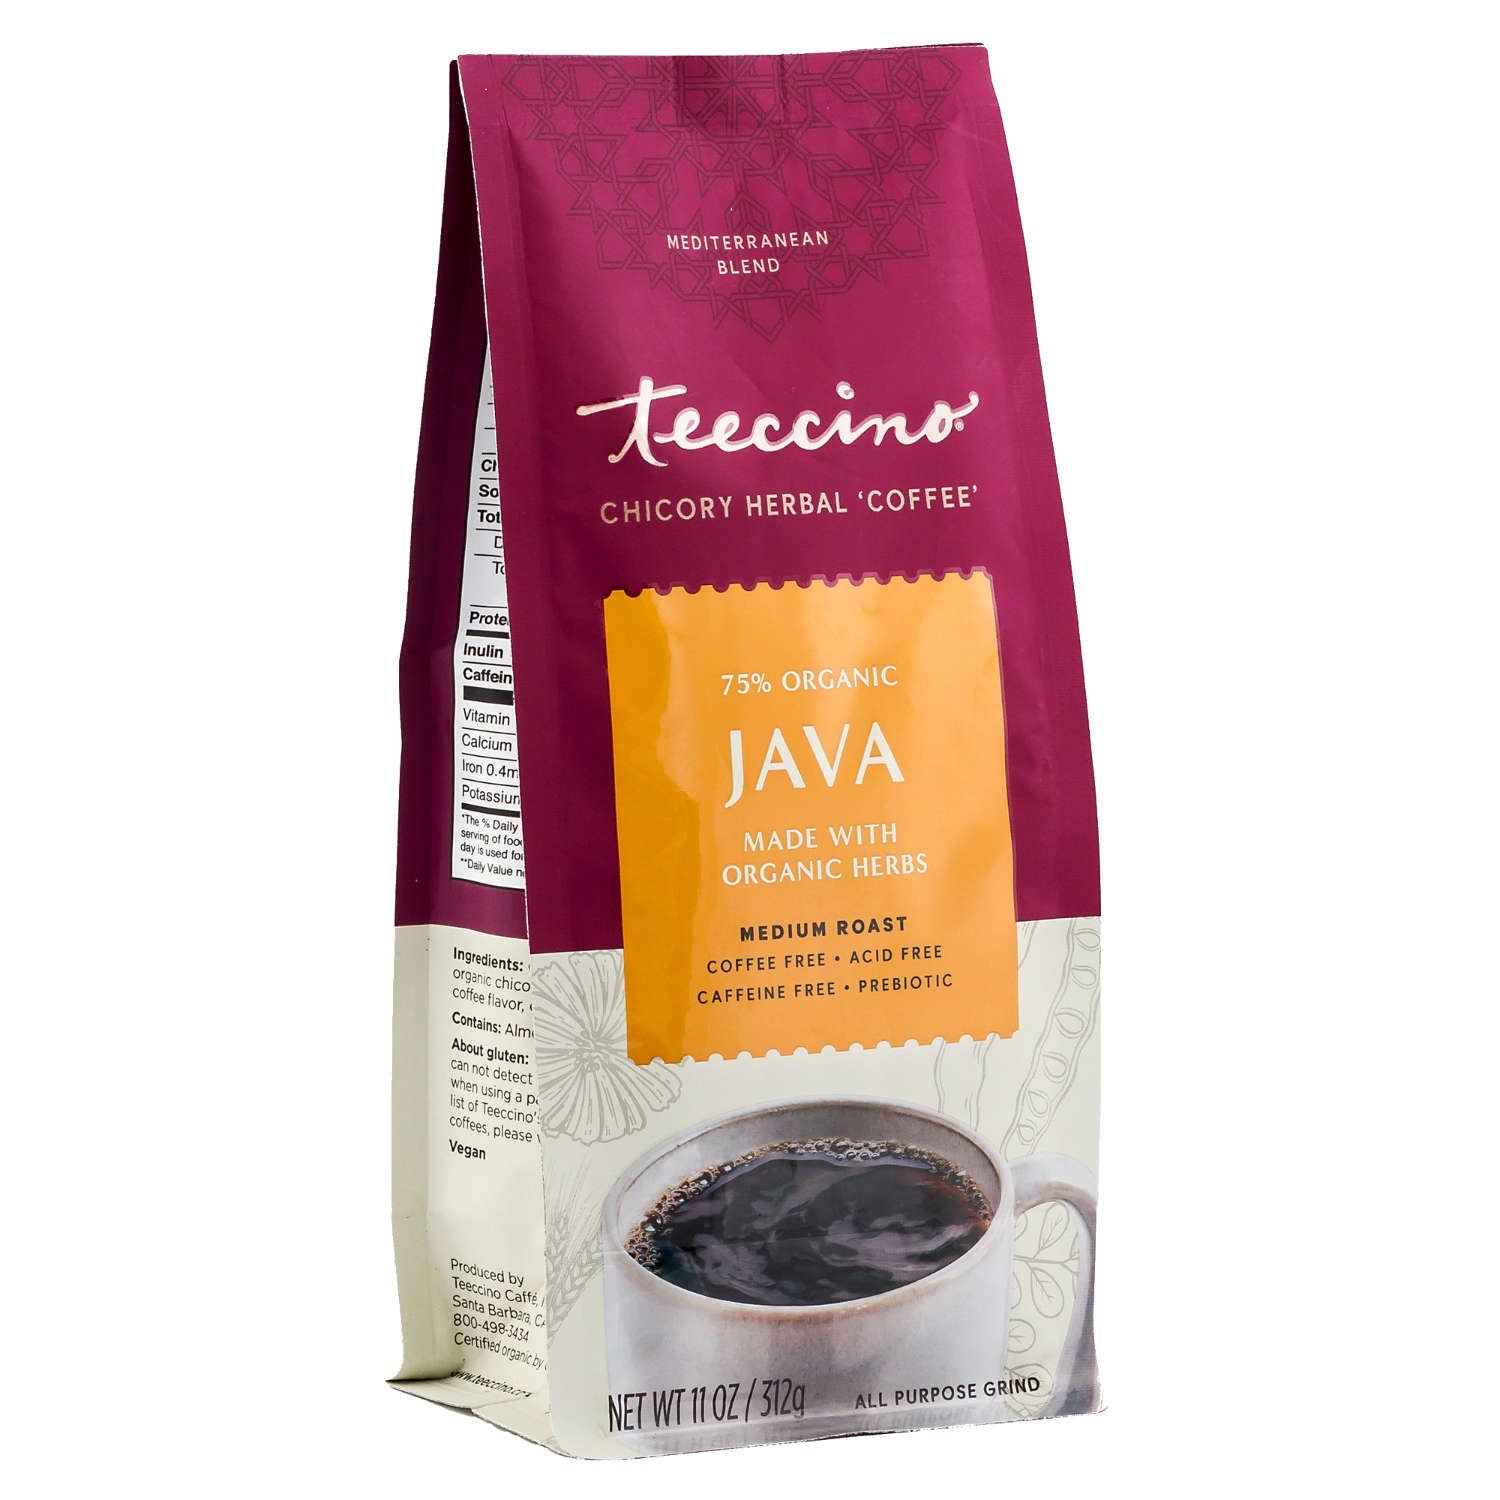 Teeccino Java Herbal Coffee (Medium Roast) 312g